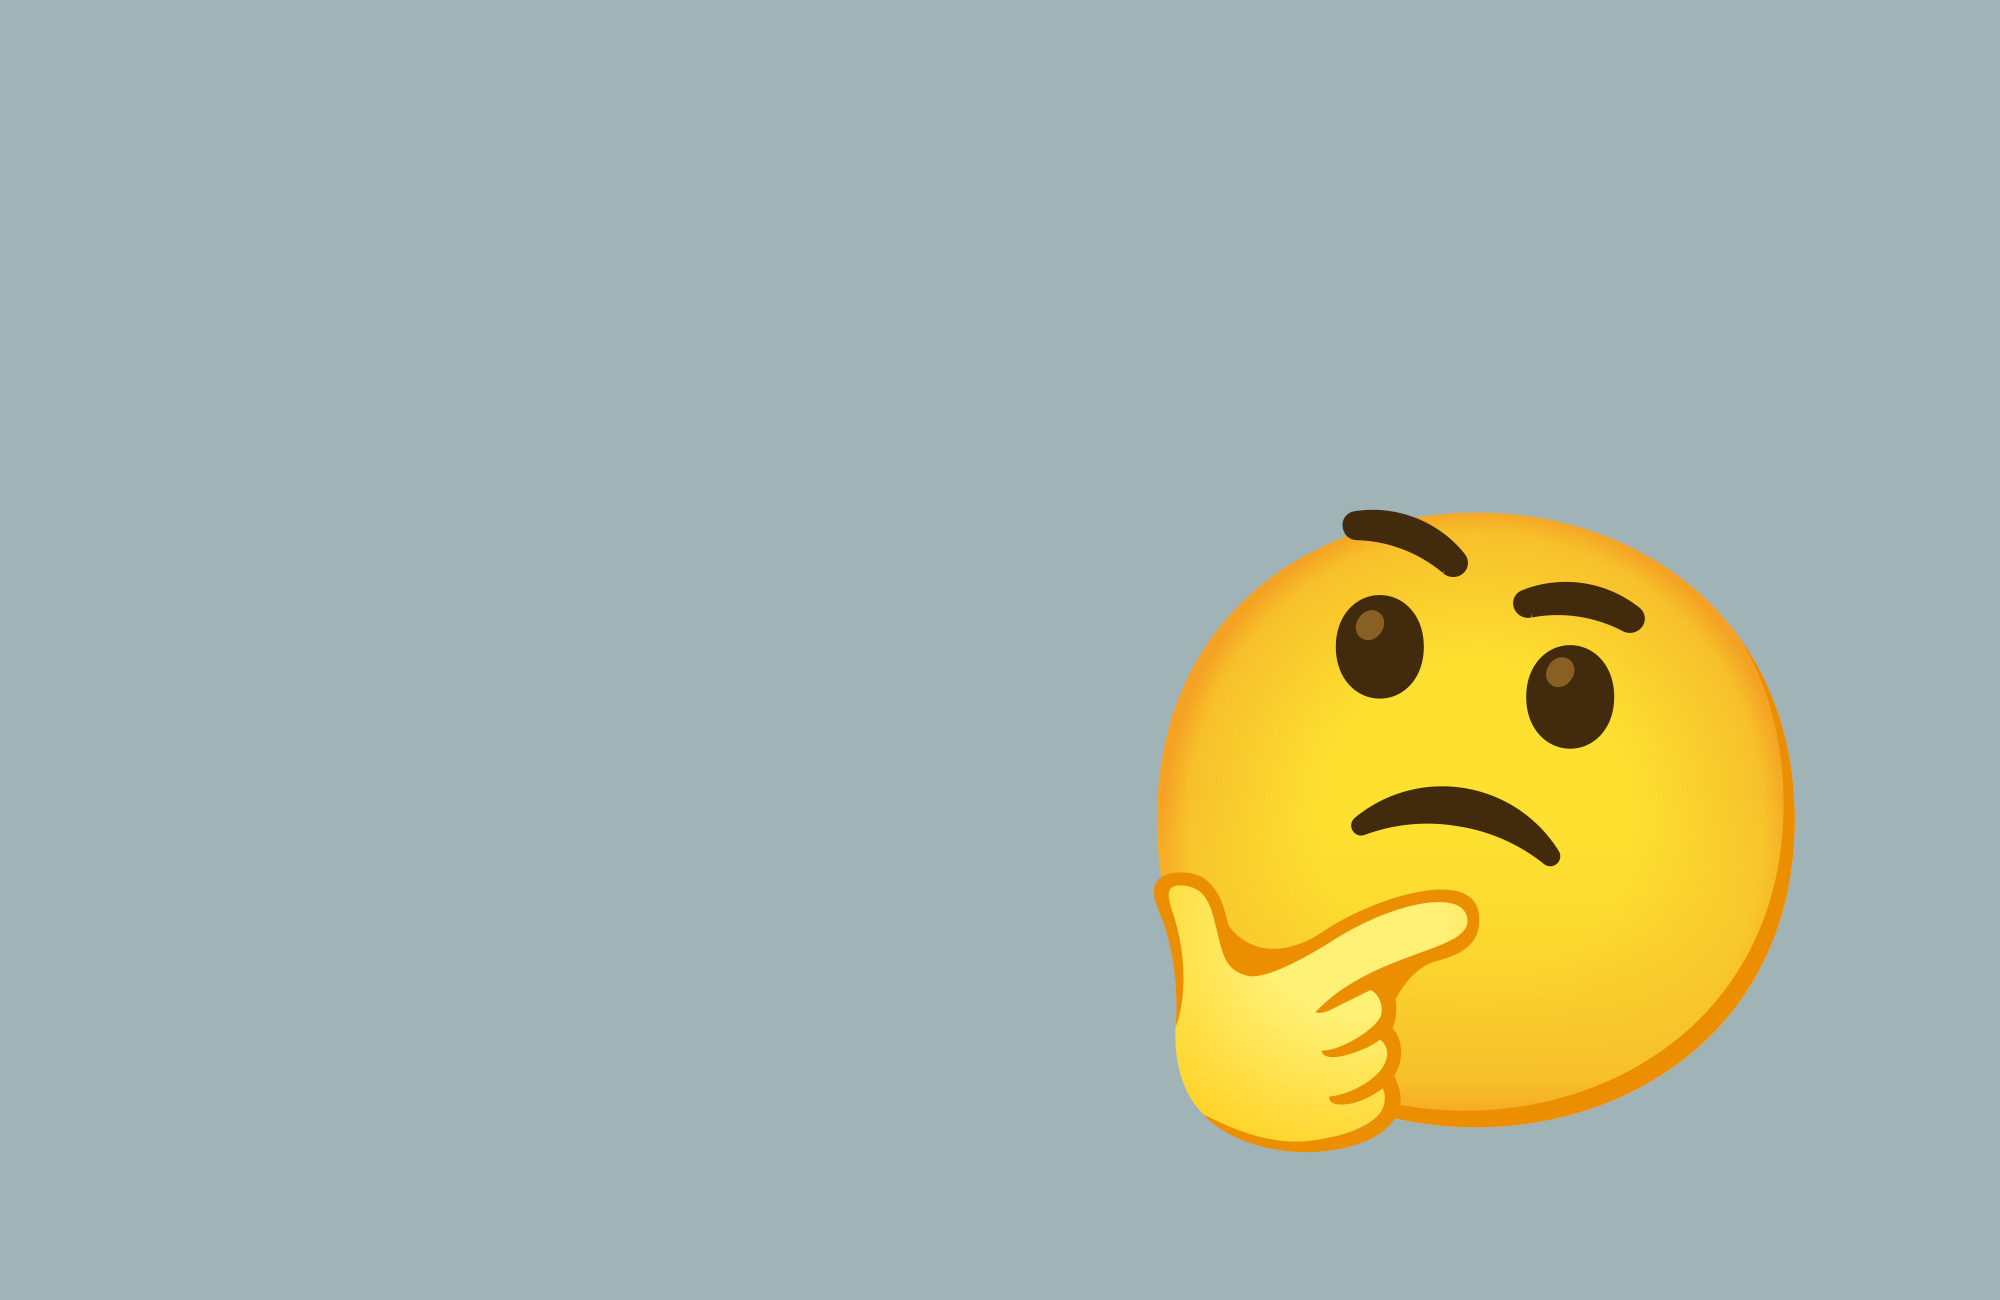 The dangers of using Emojis in sensitive contexts.